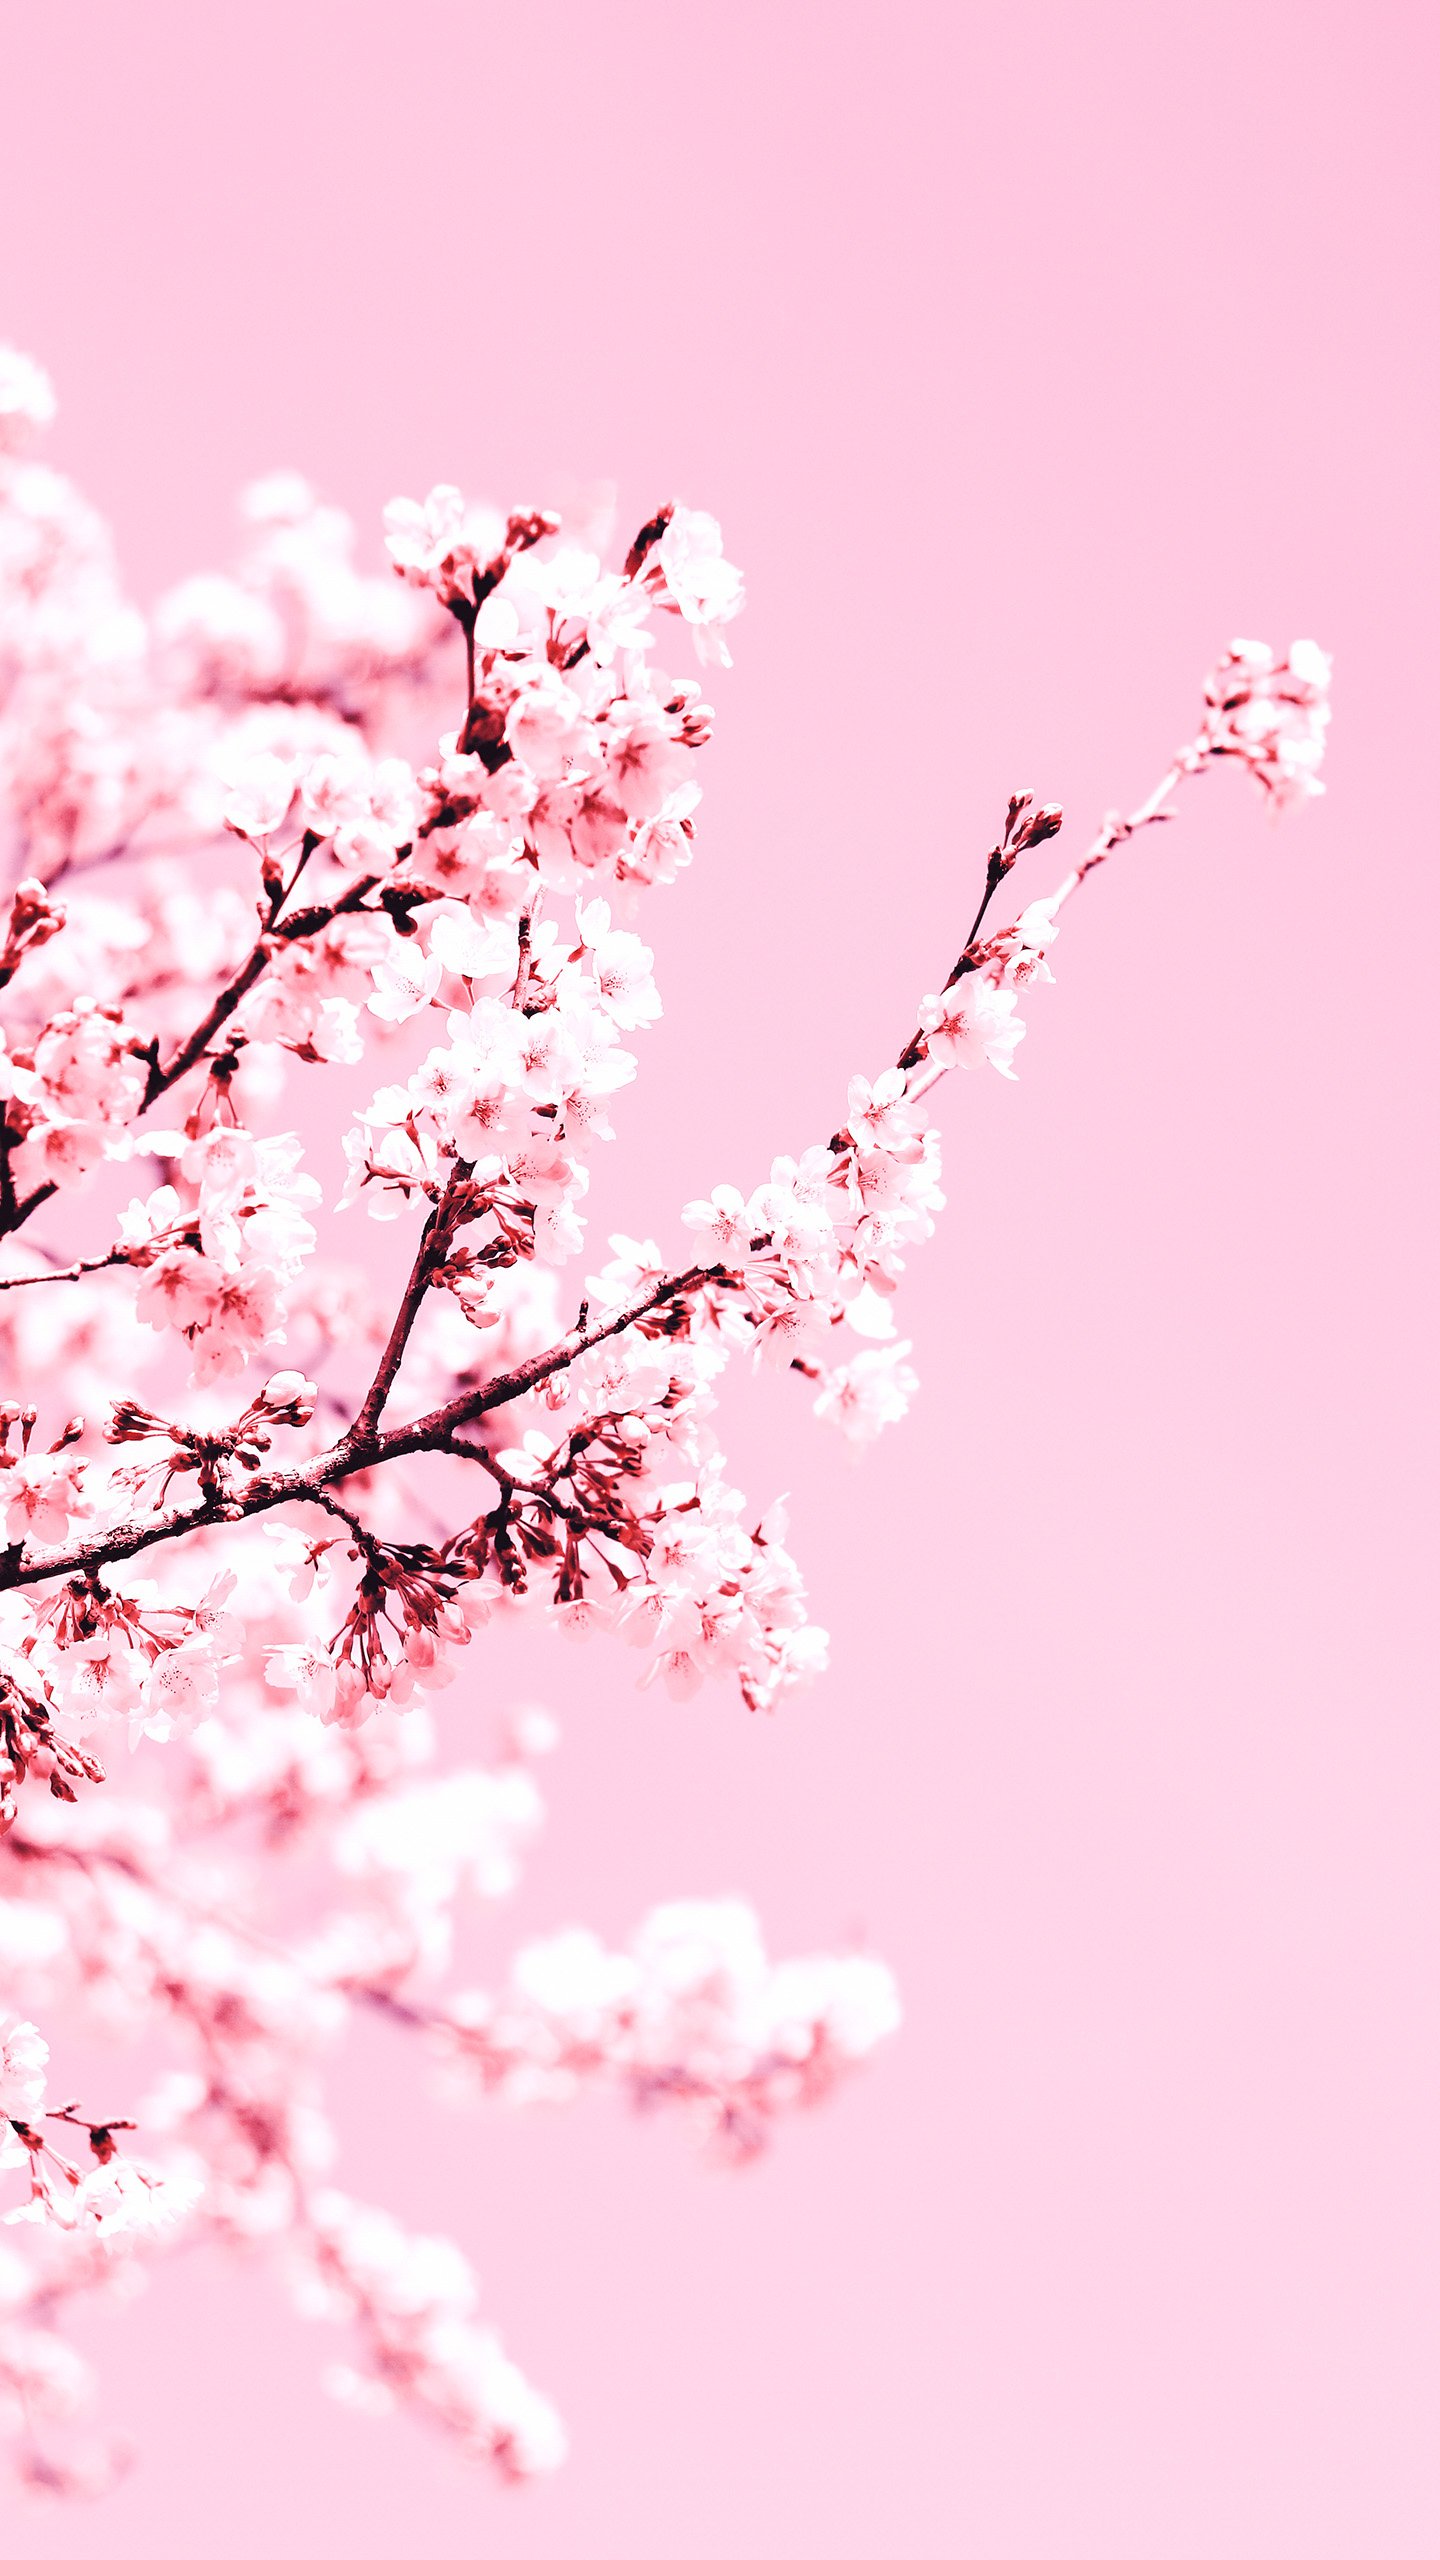 Wallpaper Cherry Blossom Blossom Flower Petal Tree Background   Download Free Image